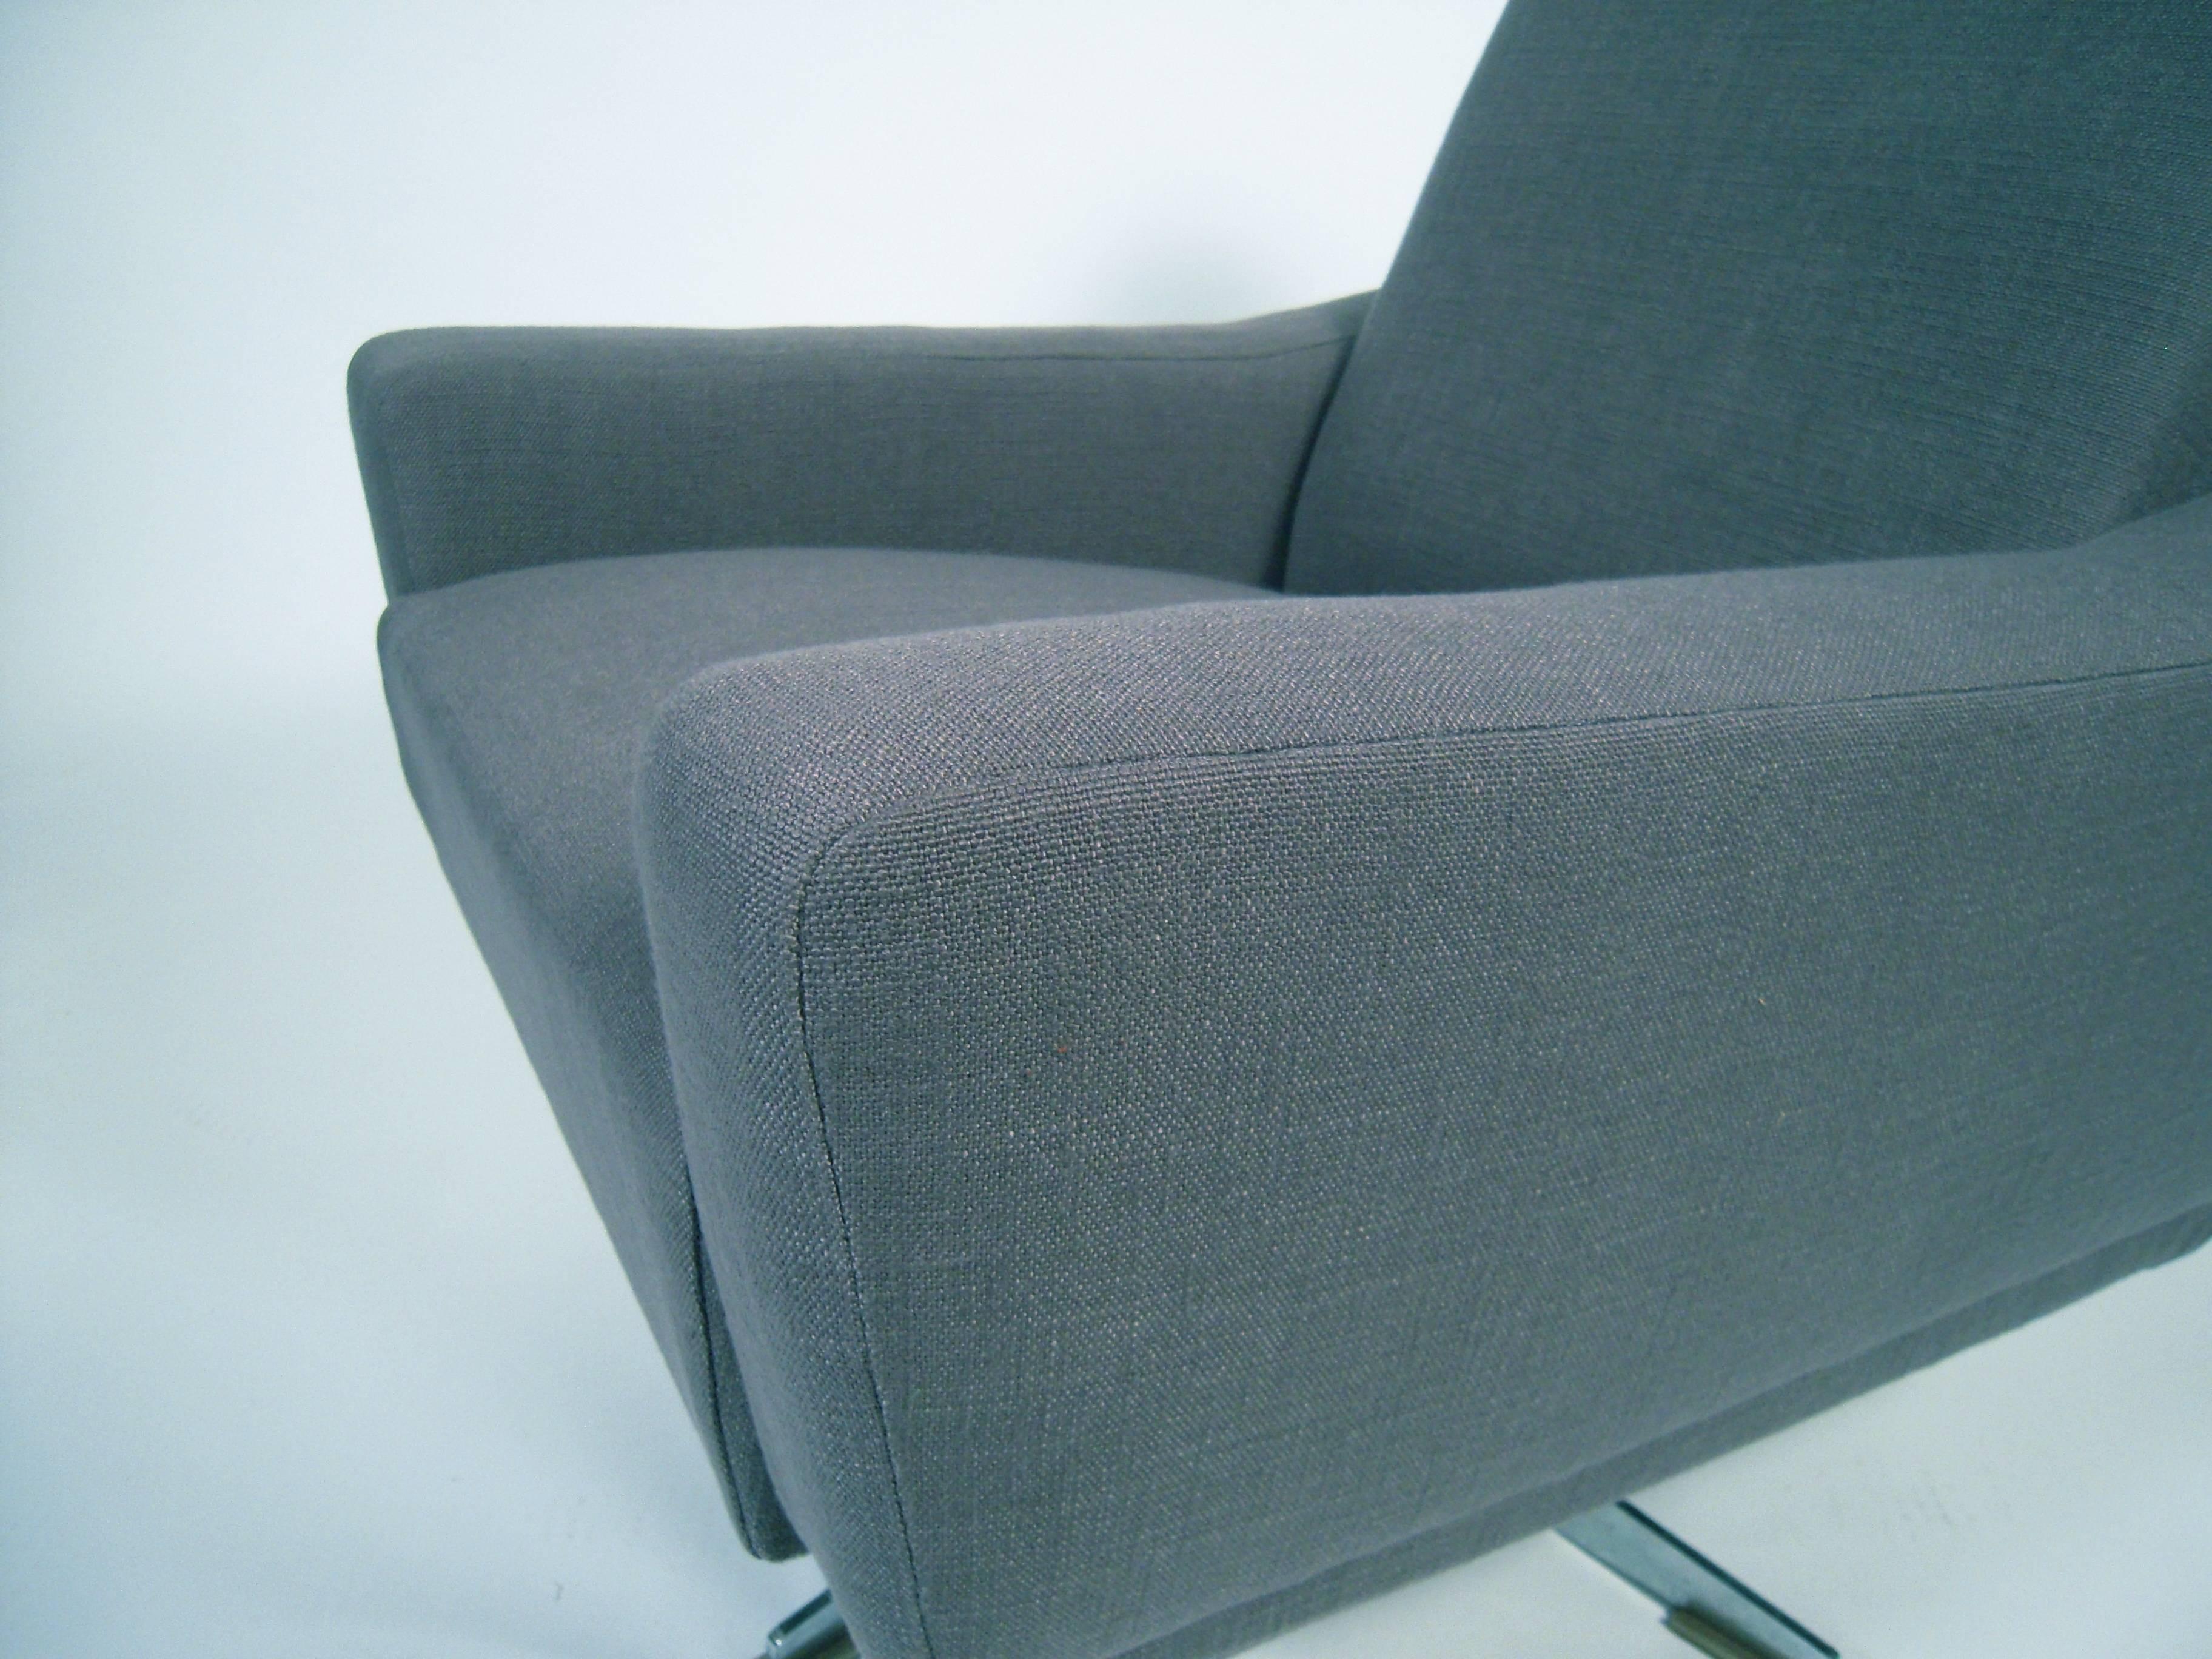 Pair of Unusual and Versatile German Mid-Century Modern Swivel Chairs 1